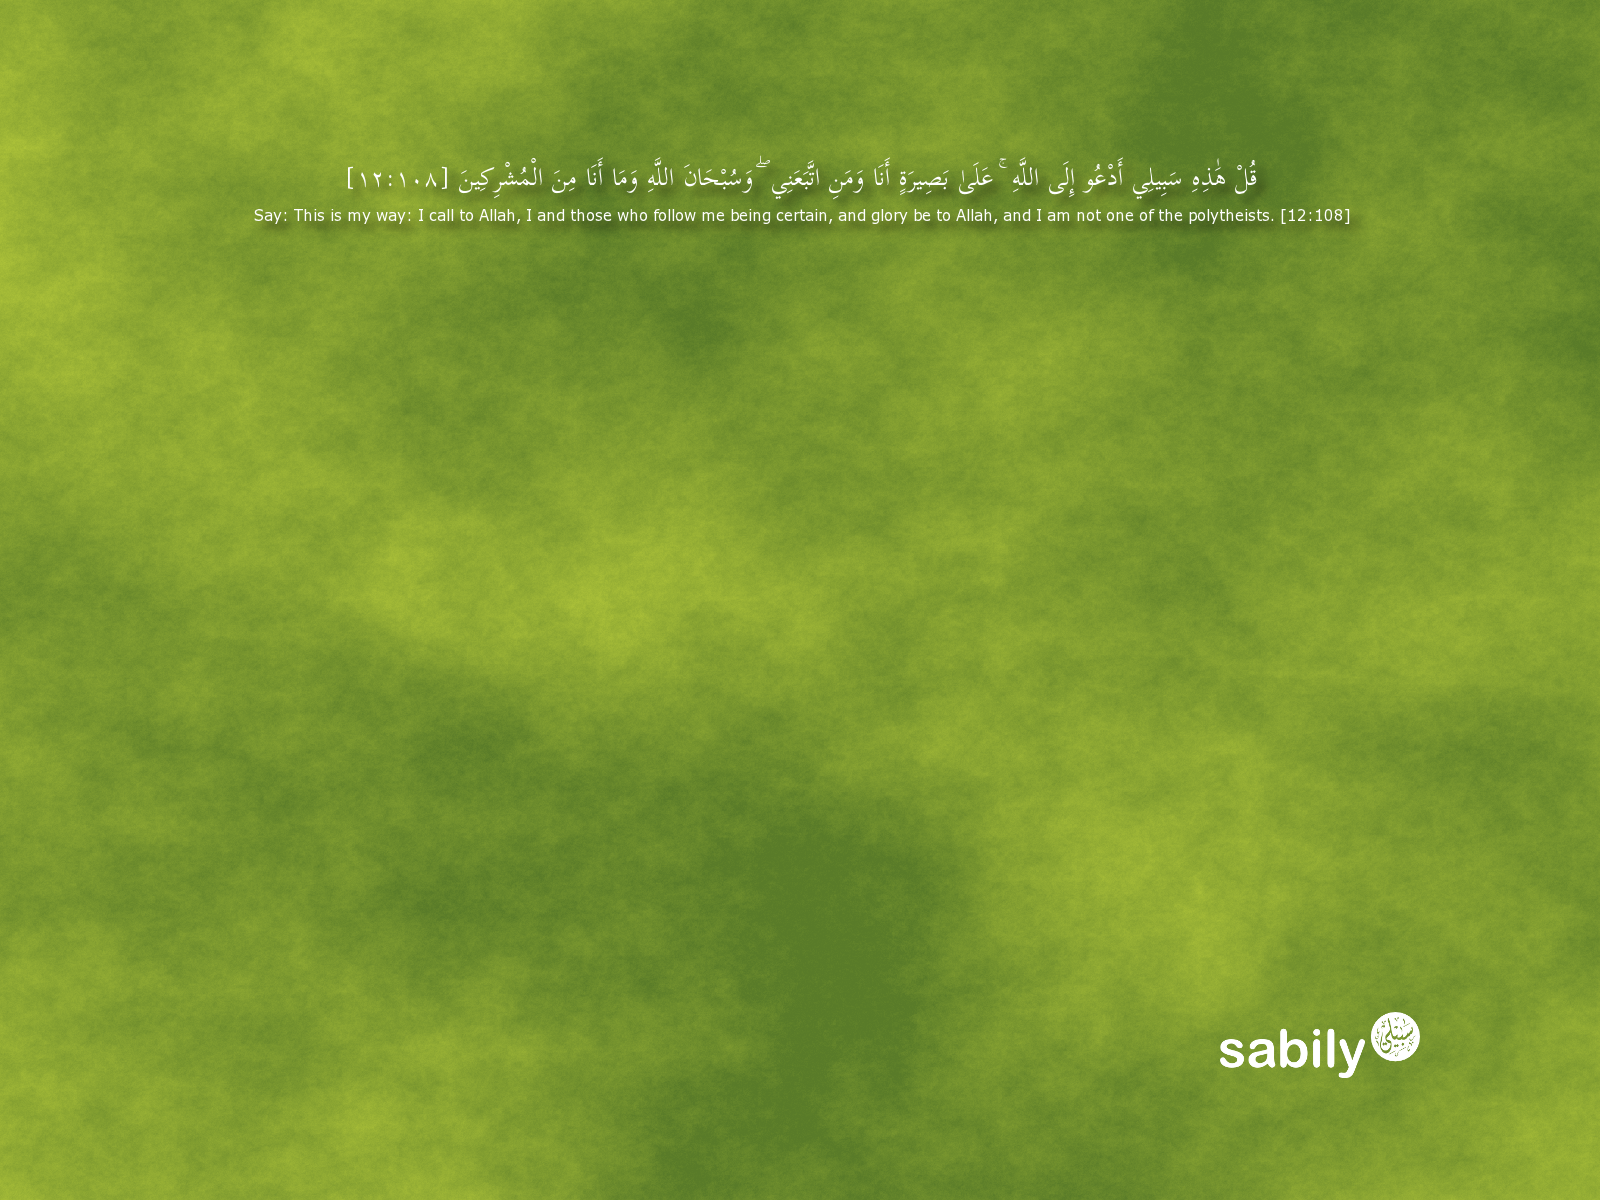 ... blogsphere: New Alternative Wallpaper and Banner for Sabily 11.10 Uhud